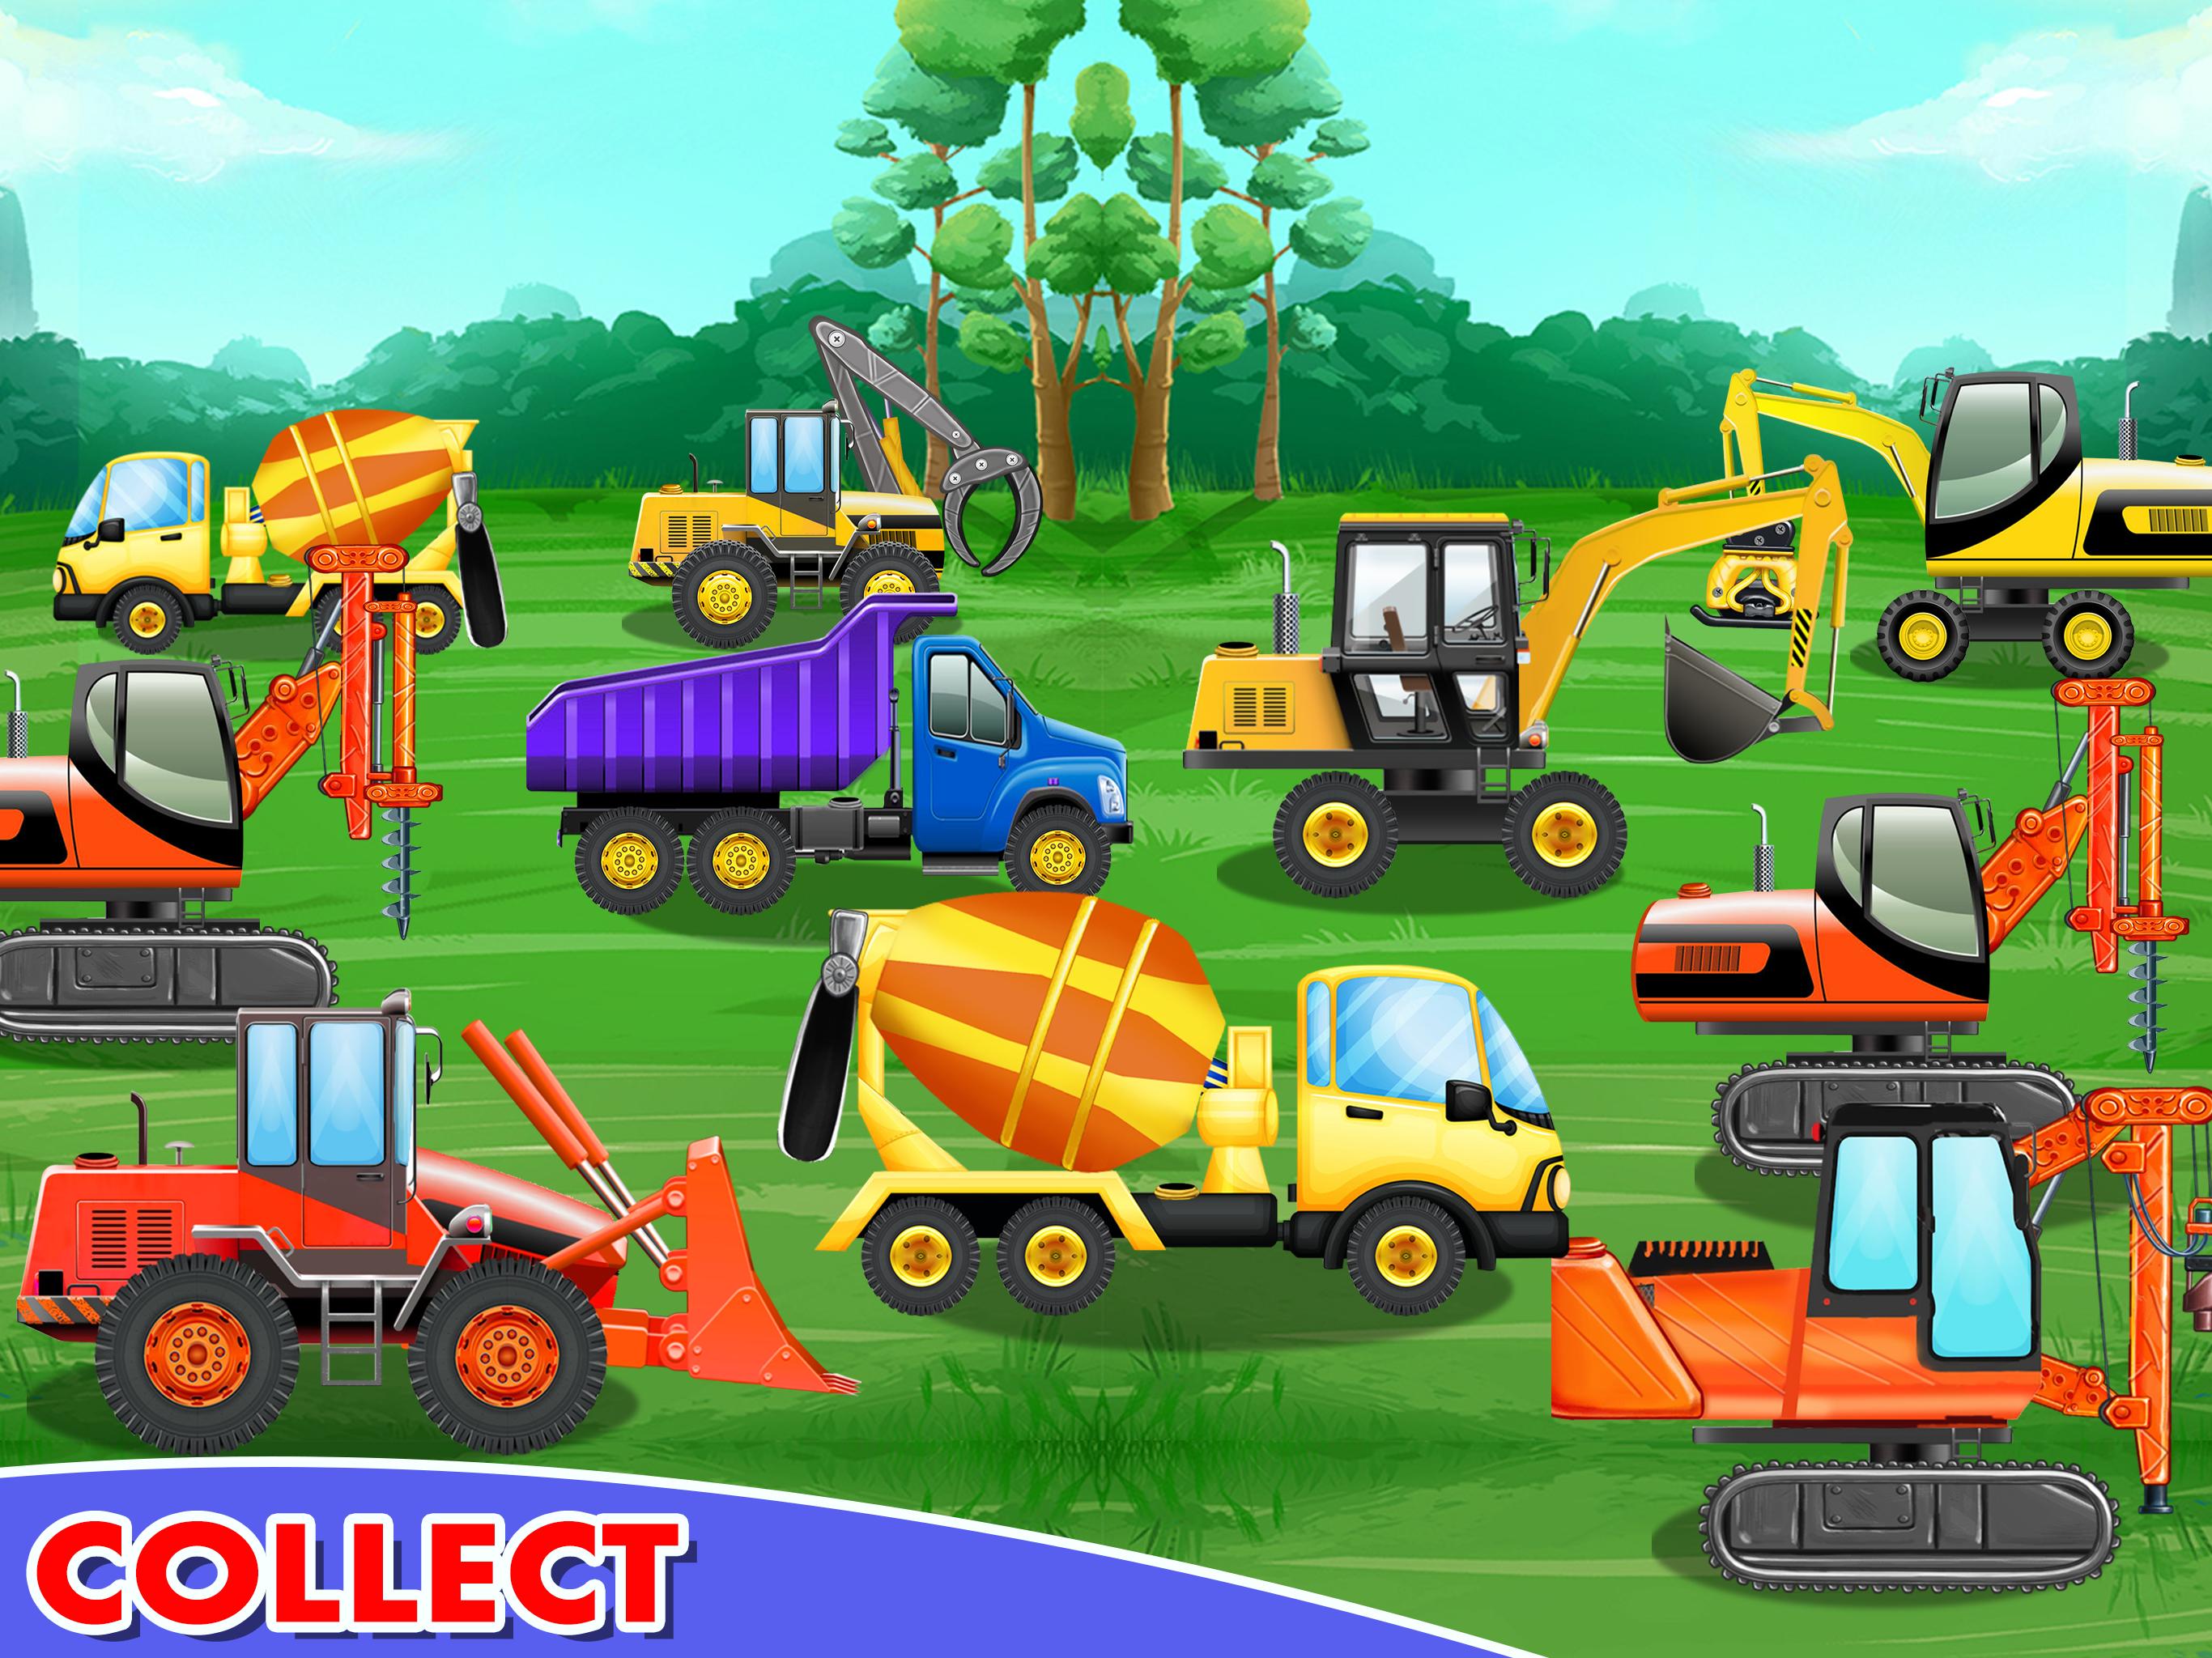 Construction Vehicles & Trucks - Games for Kids 1.9.0 Screenshot 12